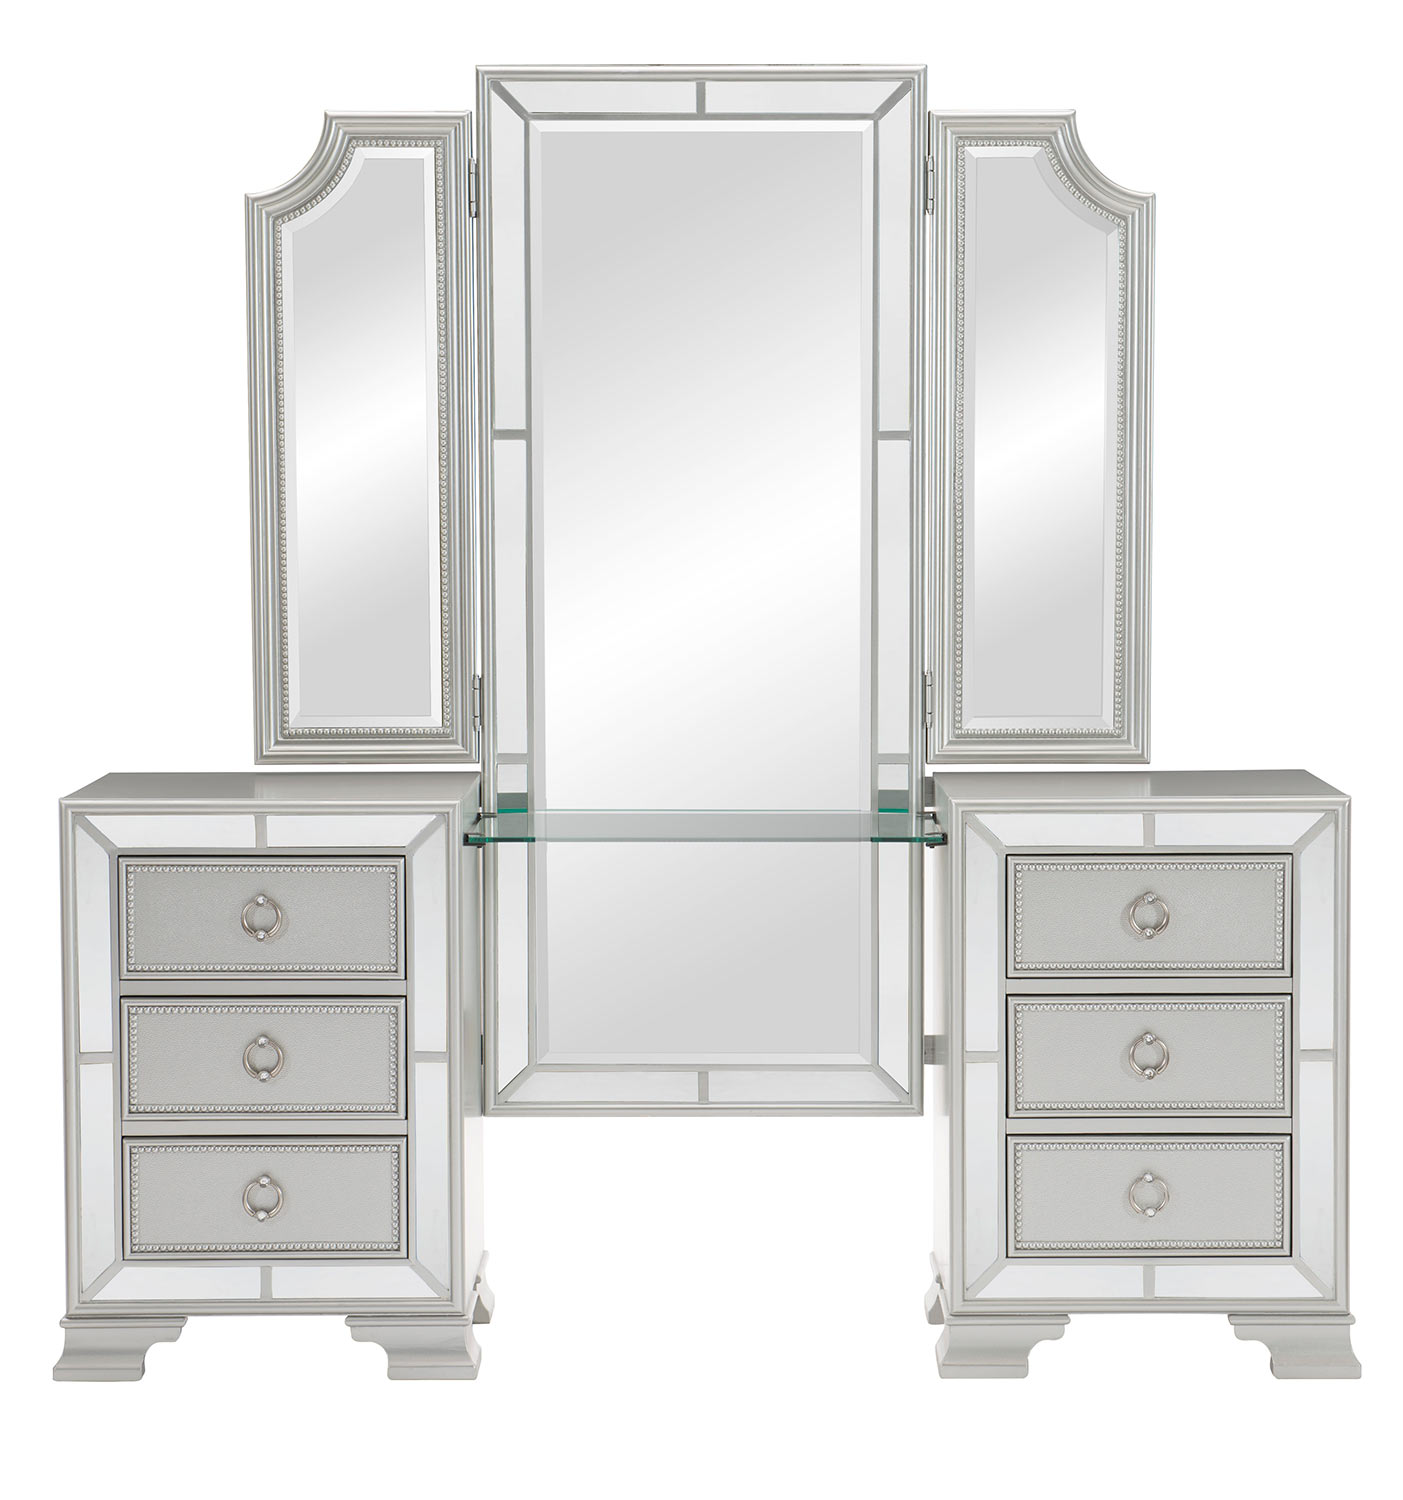 Homelegance Avondale Vanity Dresser with Mirror - Silver